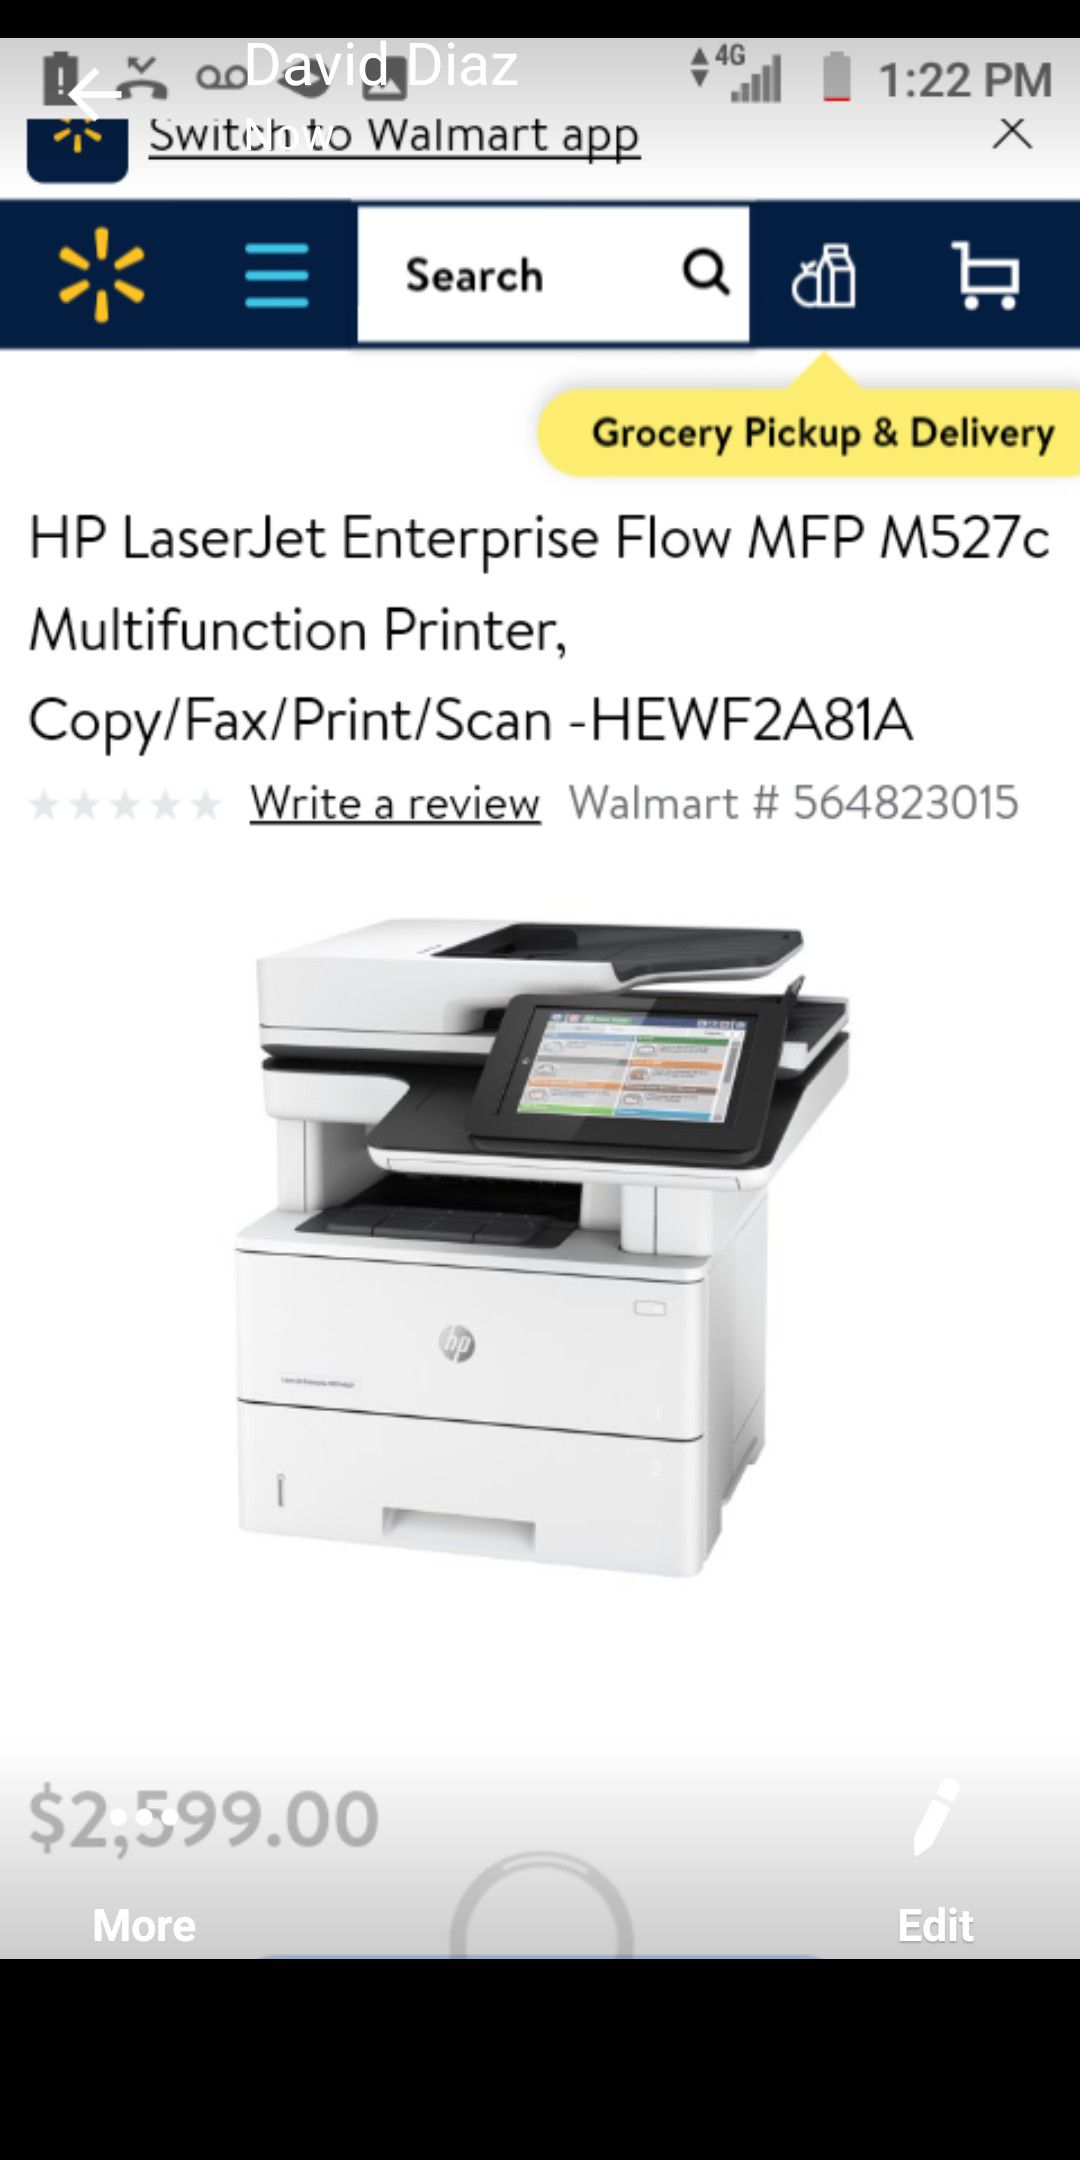 MP Laser printer fax scan copy